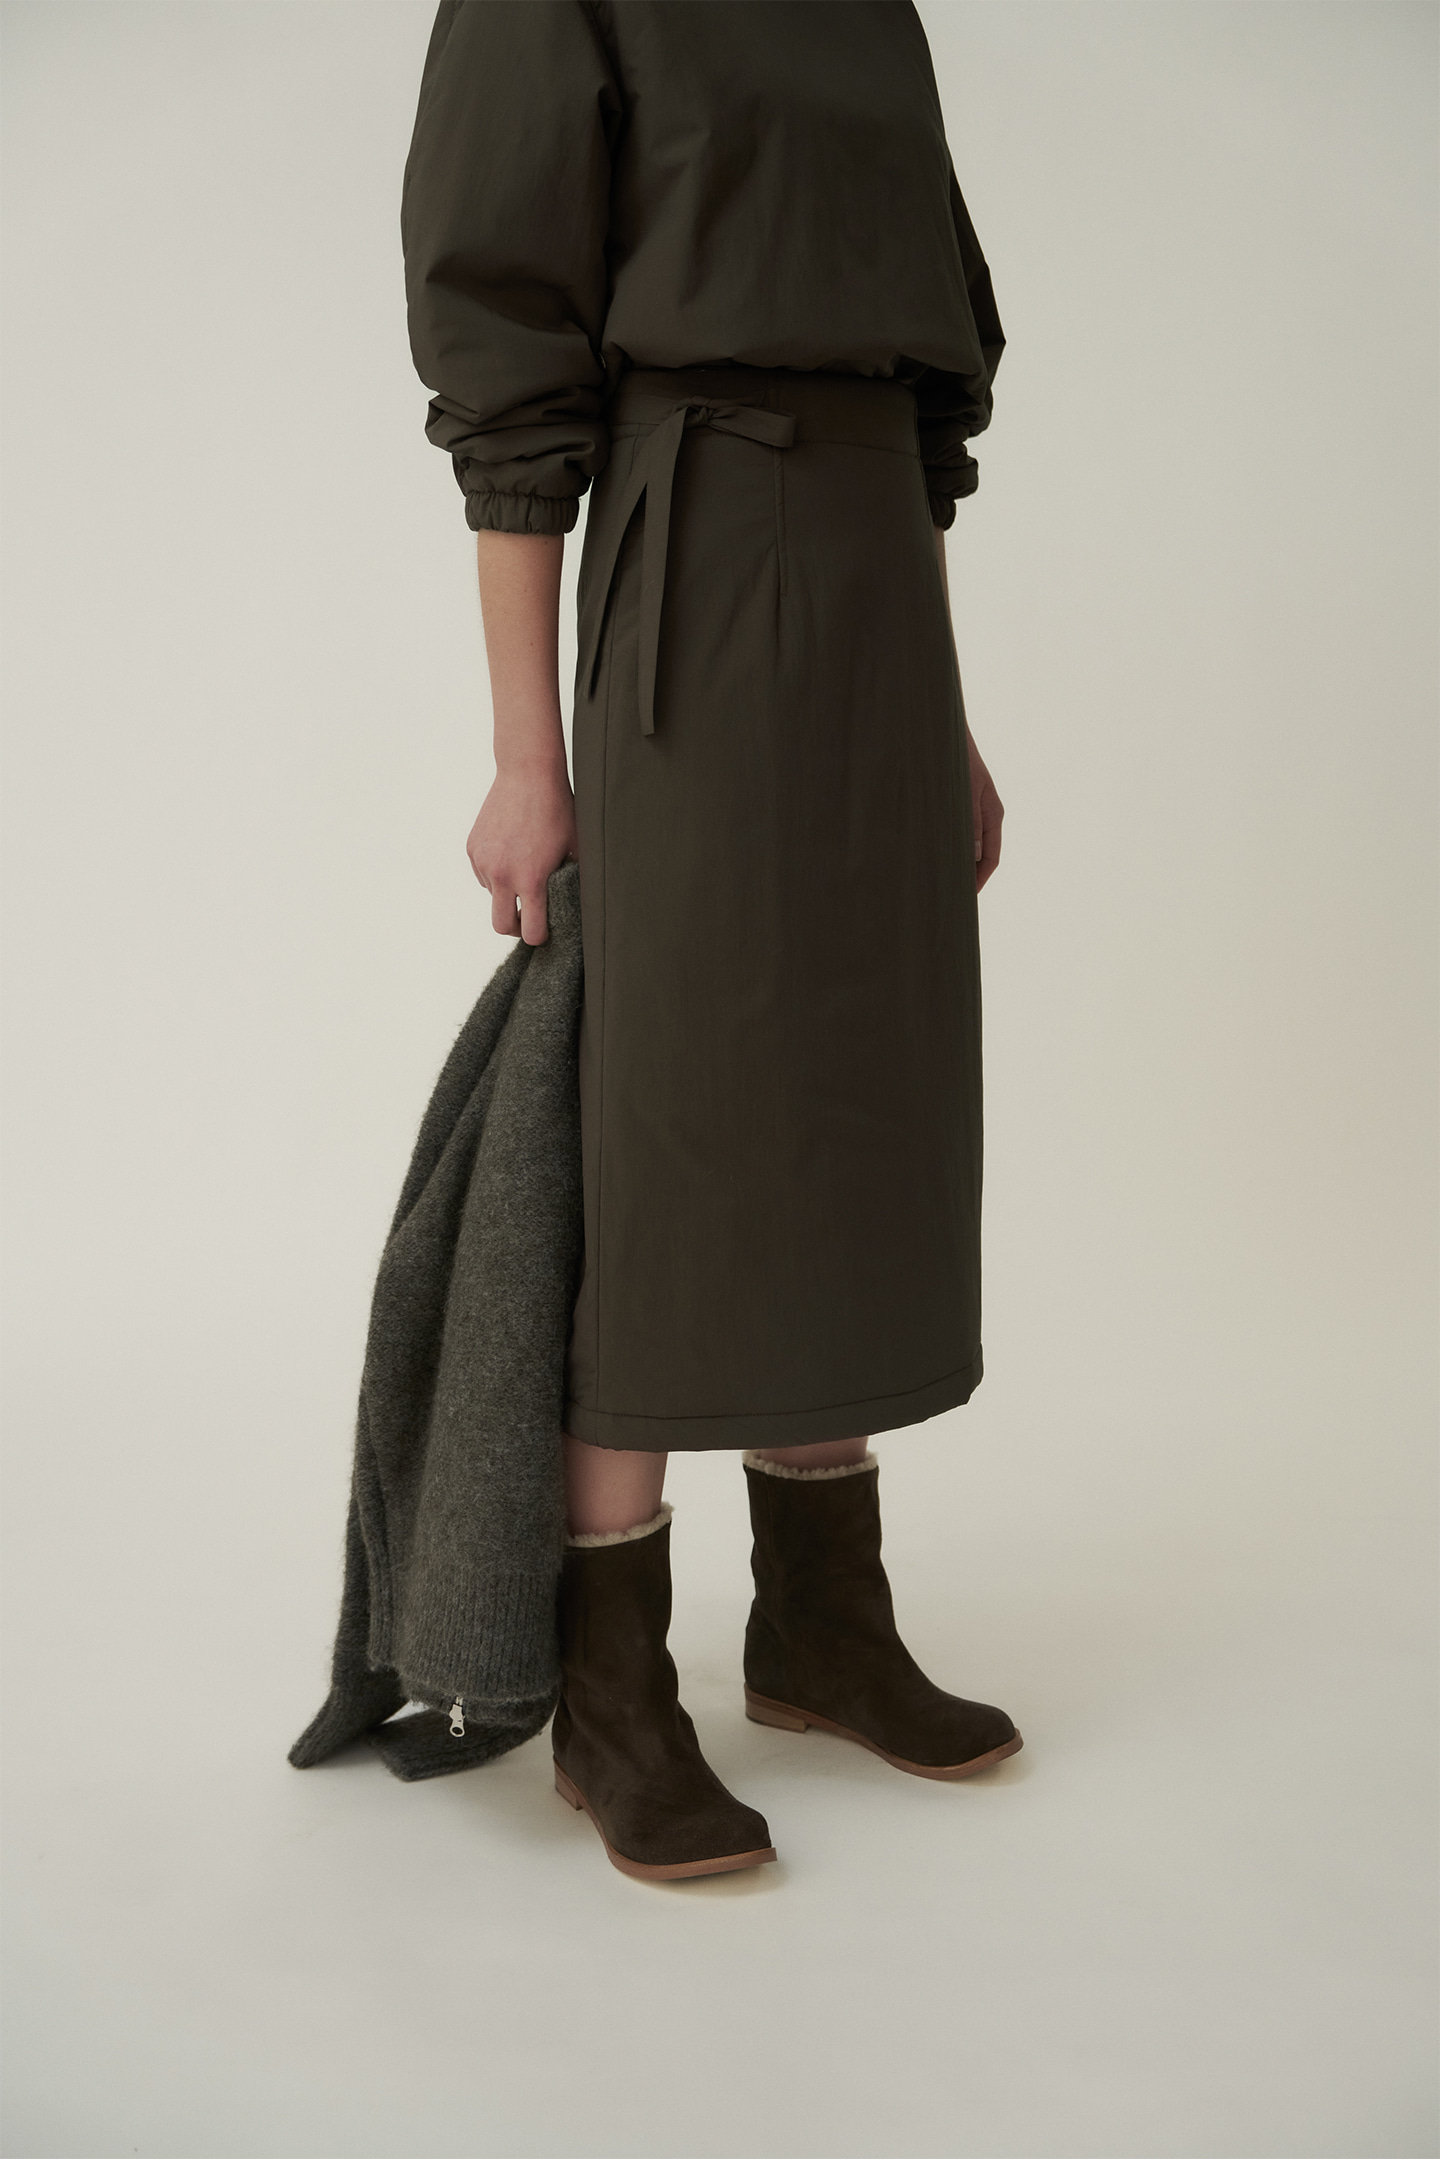 Padded skirt (cedar brown)